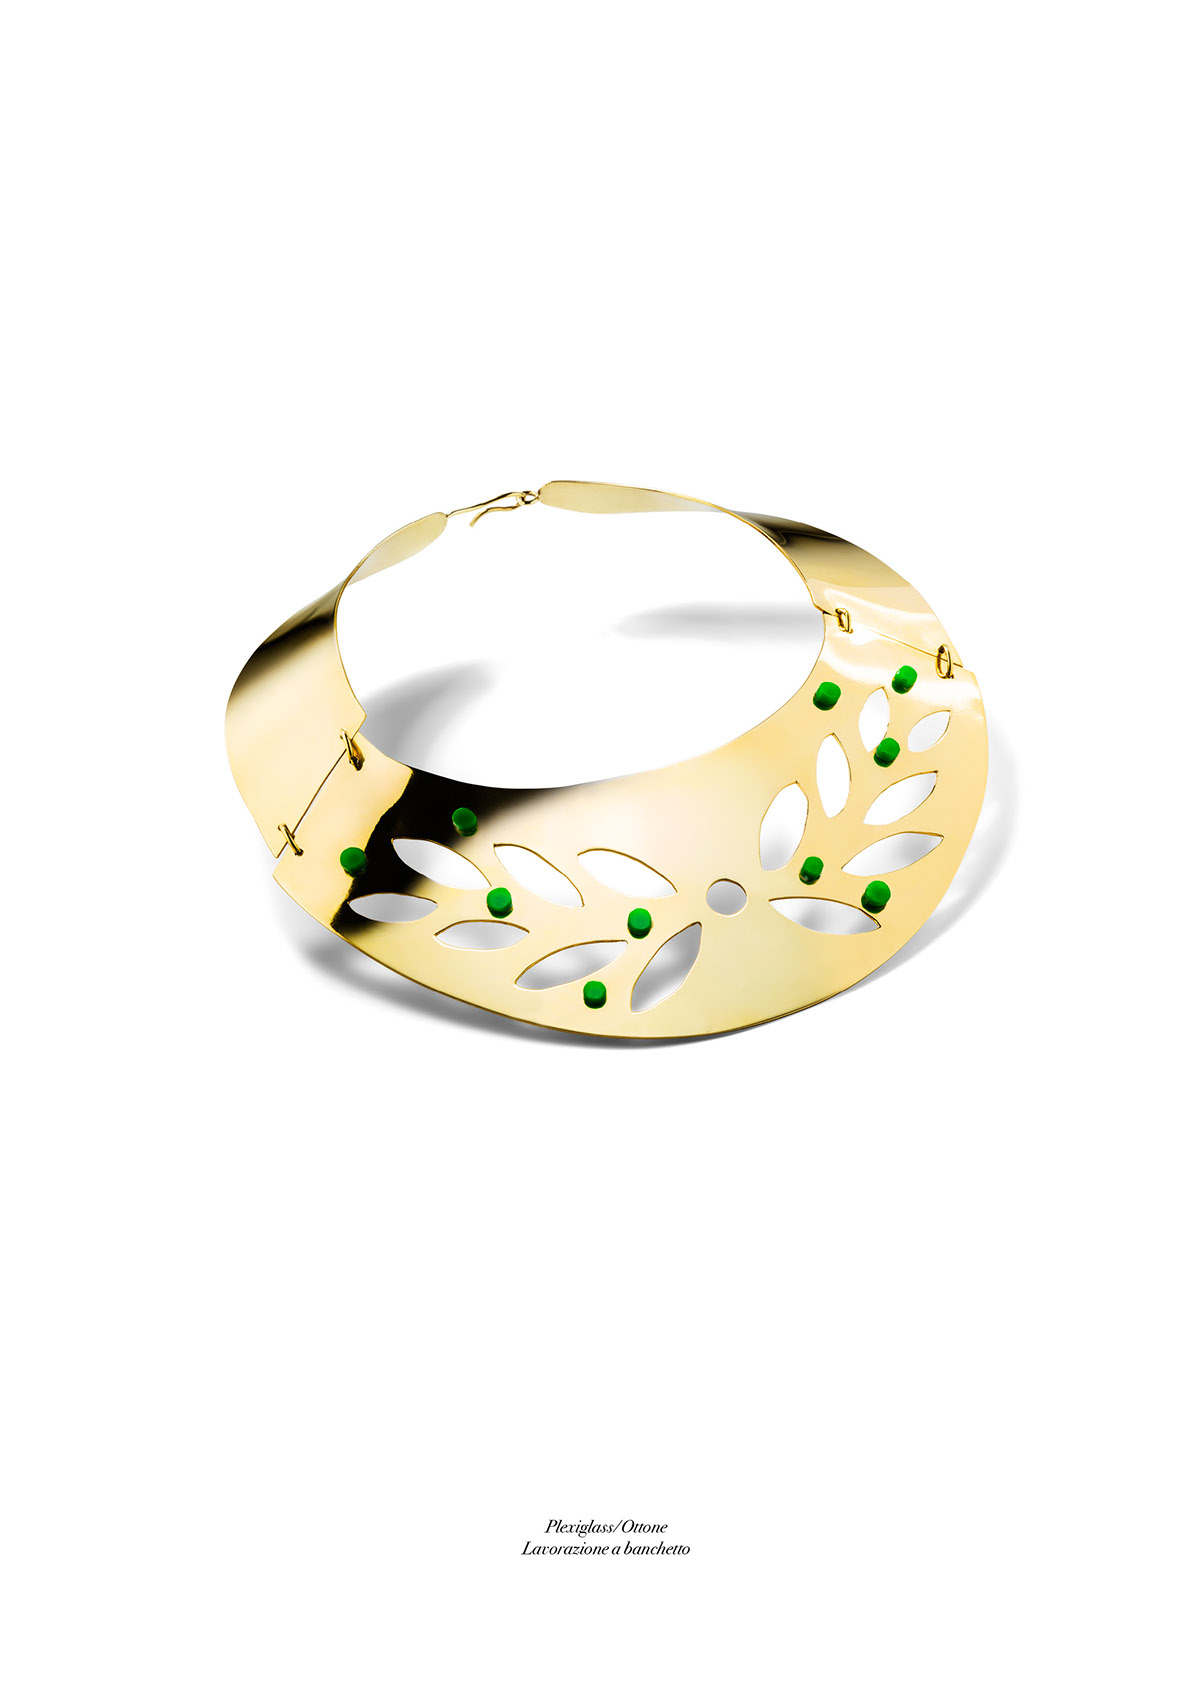 #jewelry #necklace #brass #ied #torino #project